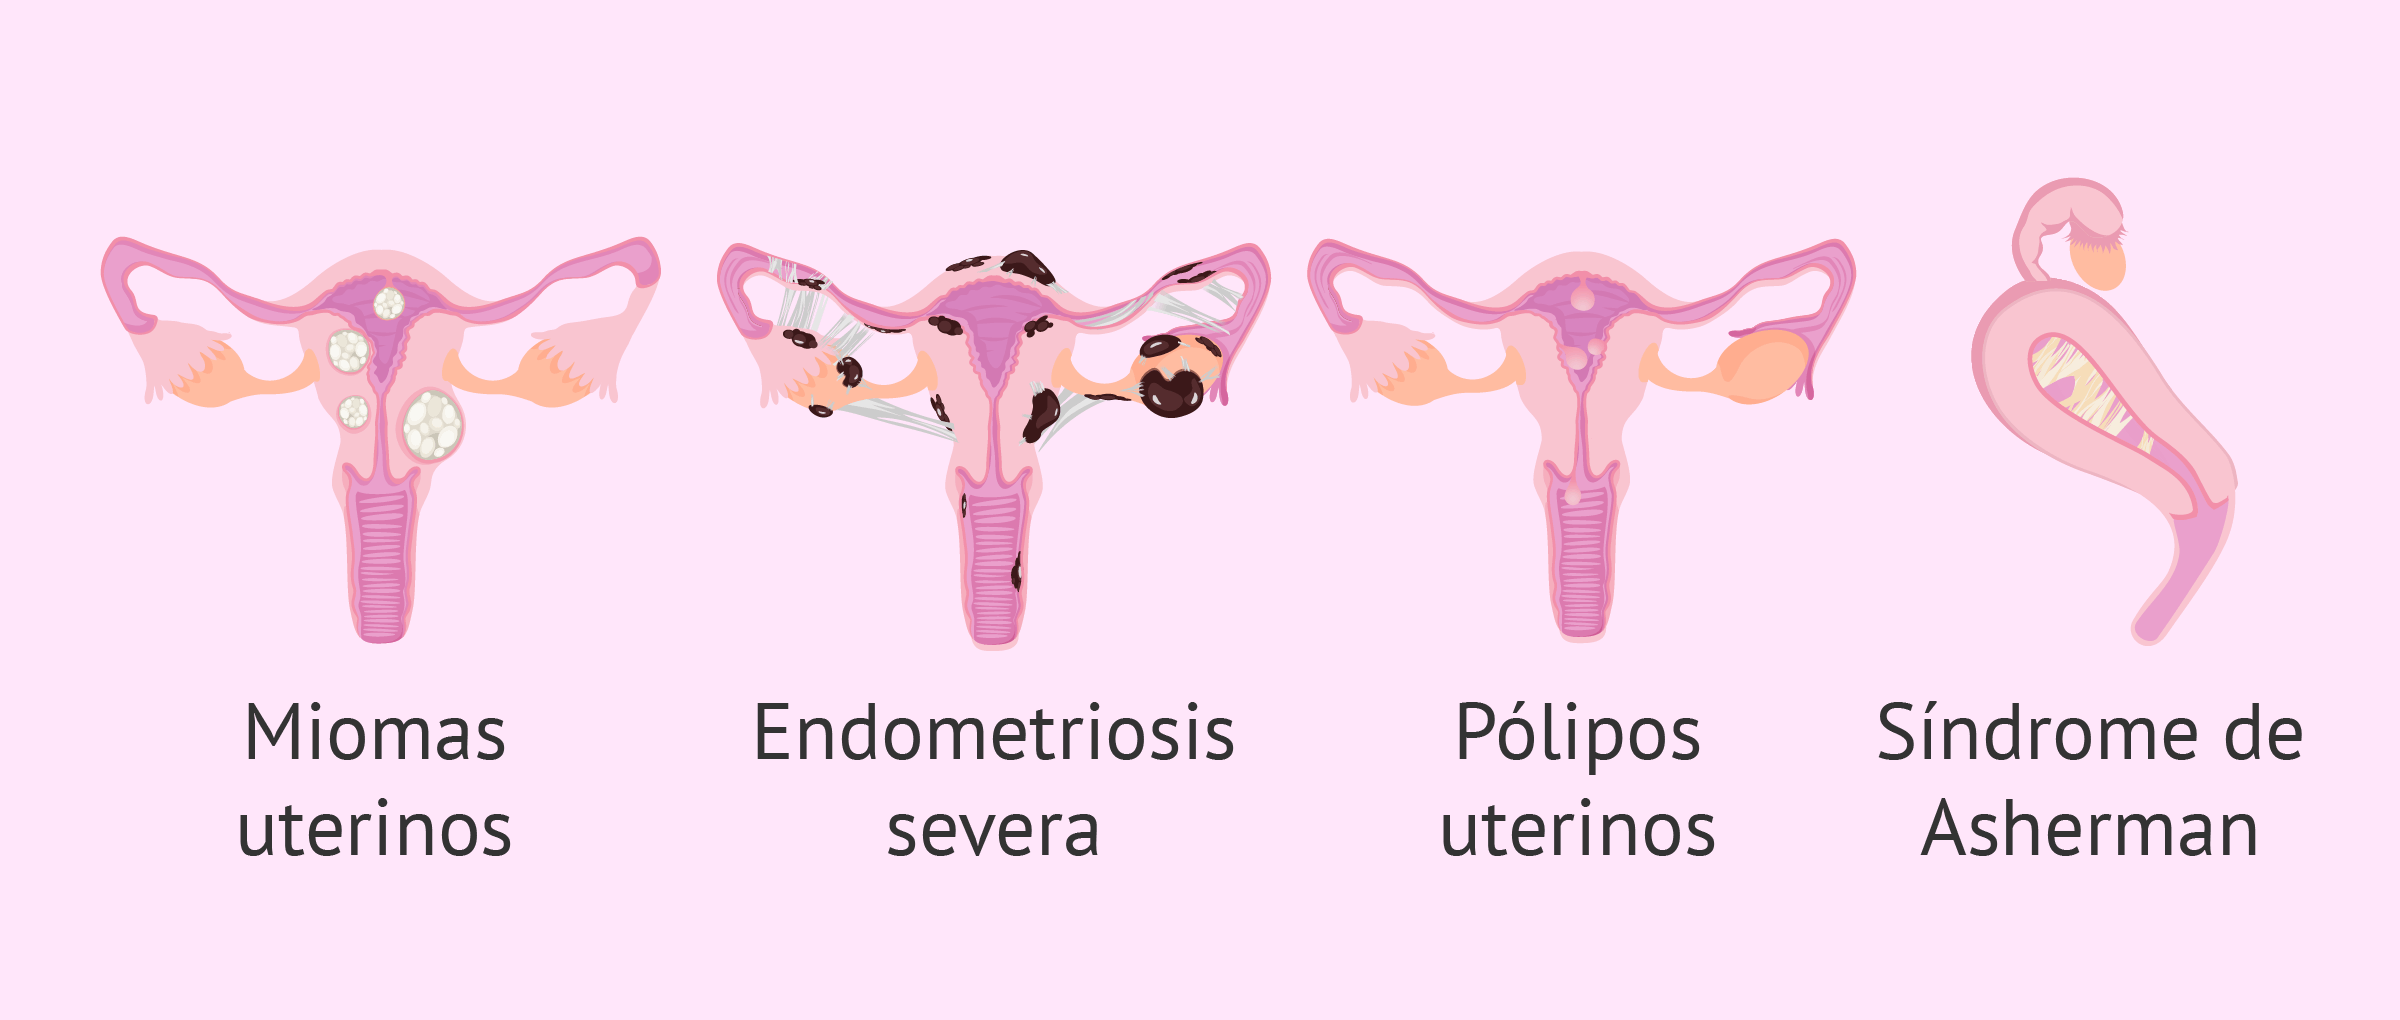 Anomalías uterinas graves e incapacidad para gestar